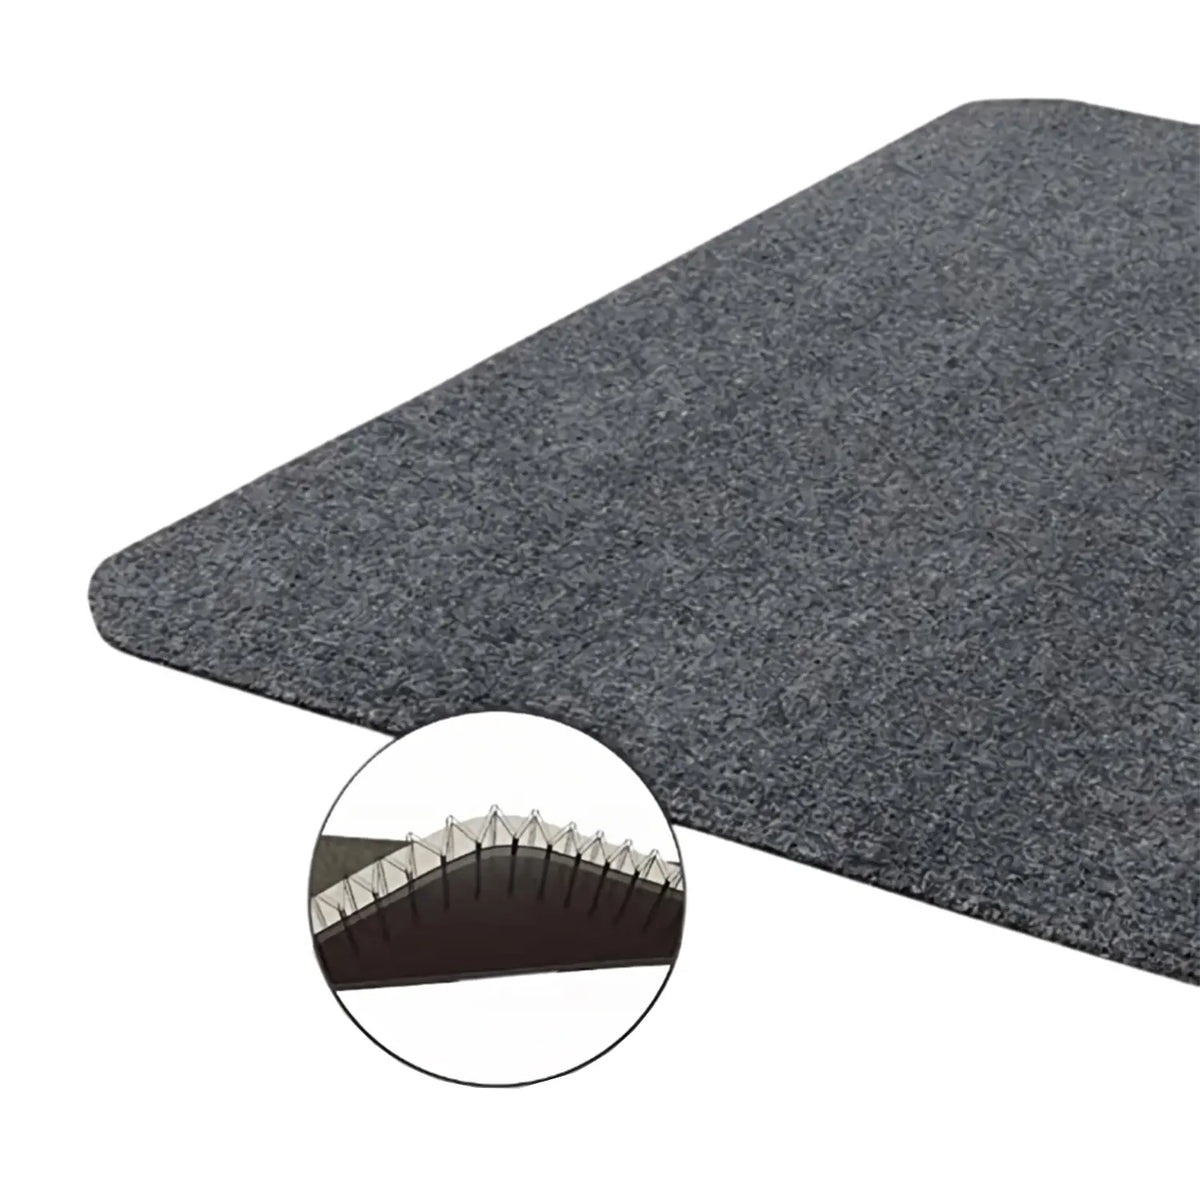 3M Polypropylene Basic Doormat